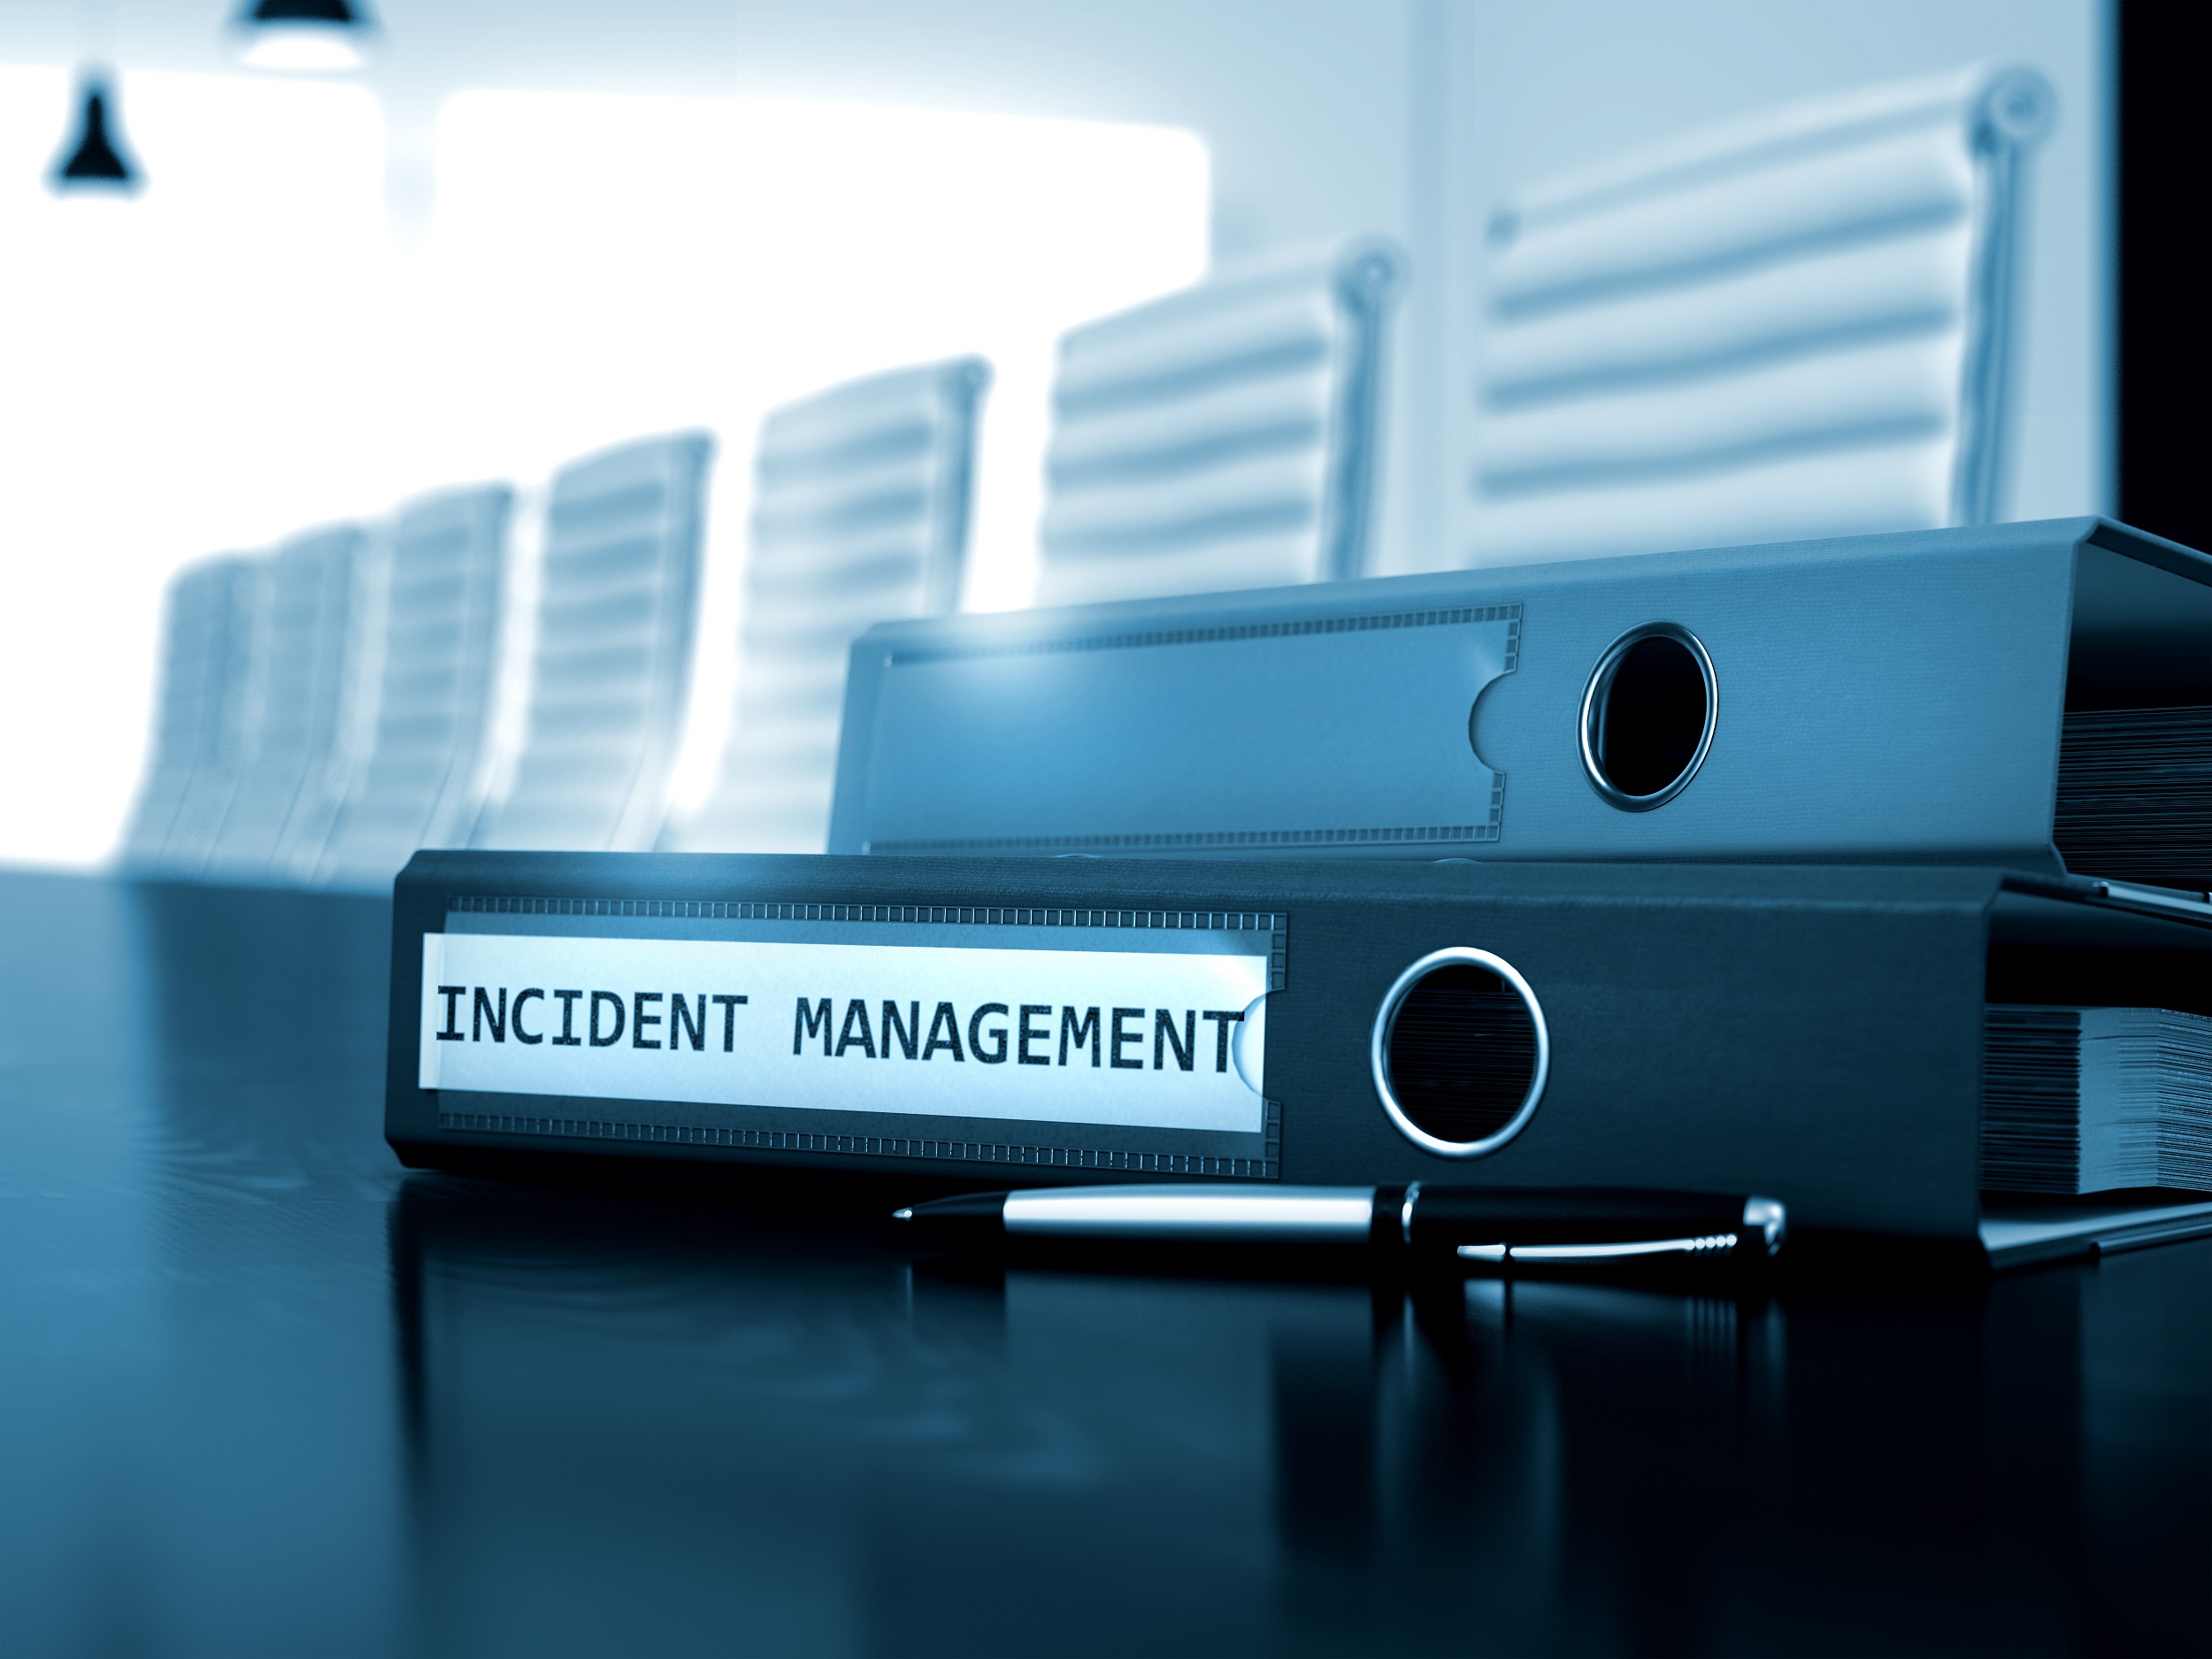 Incident Management